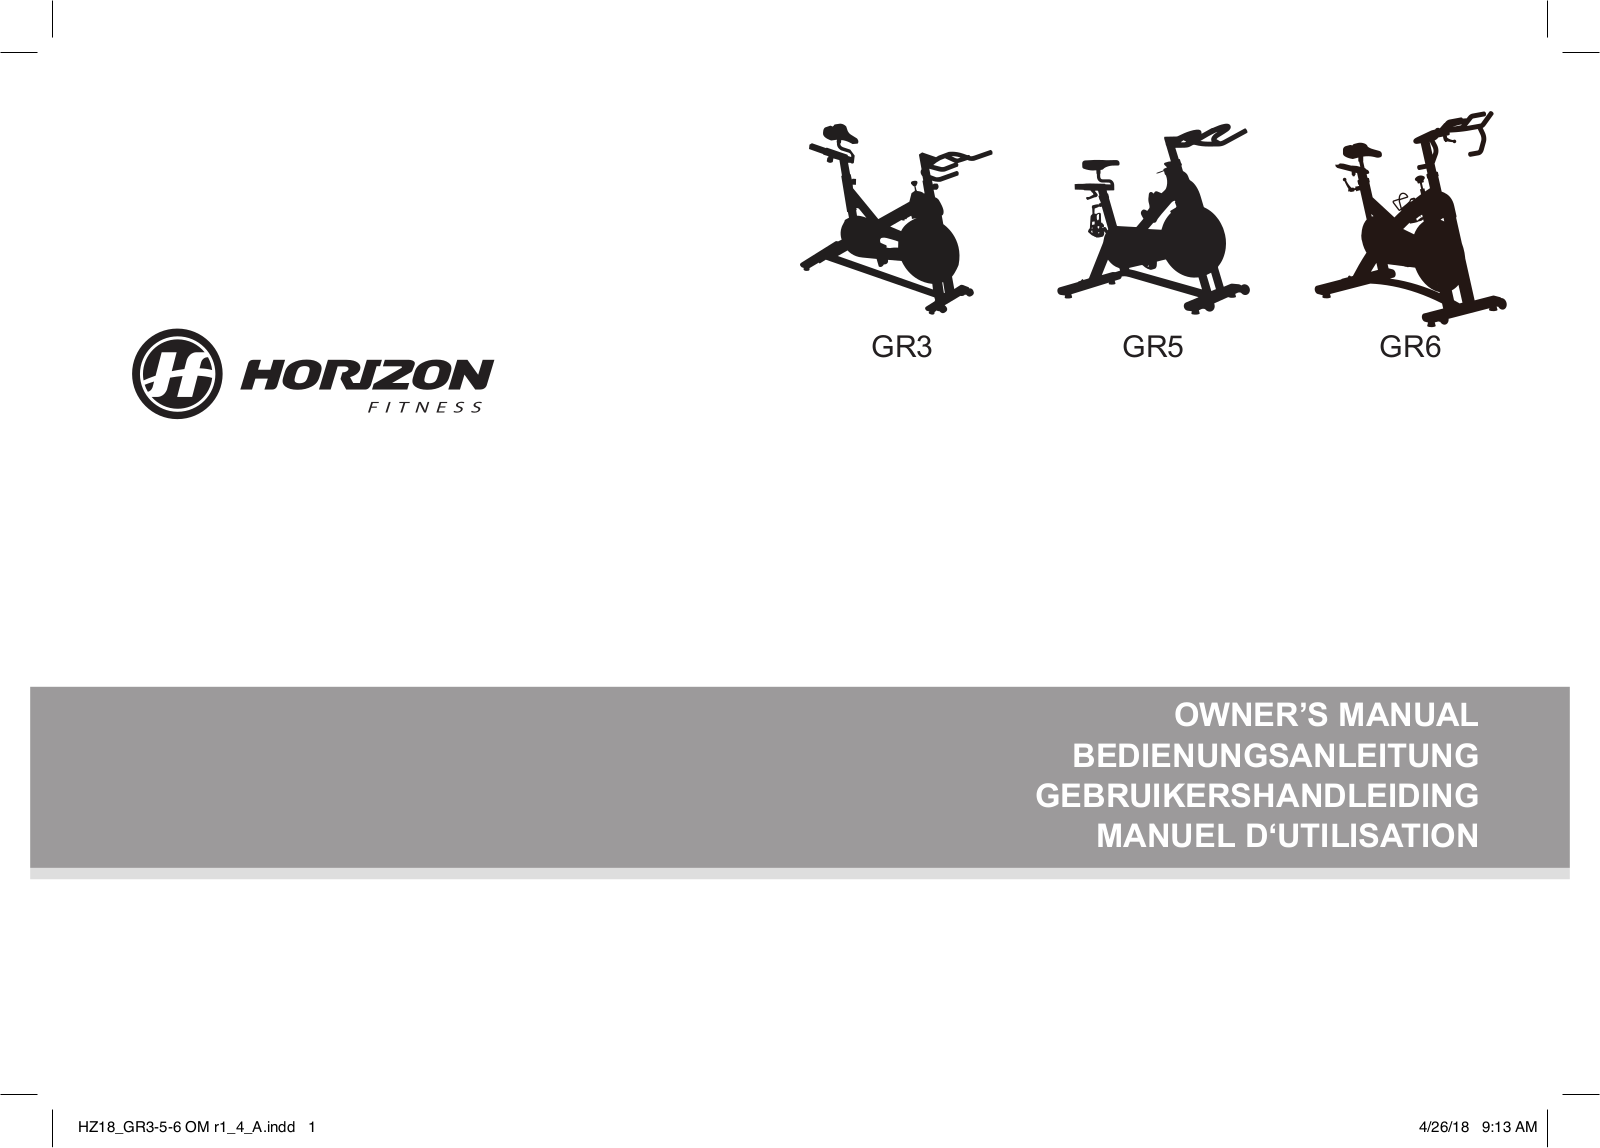 Horizon Fitness GR6 operation manual